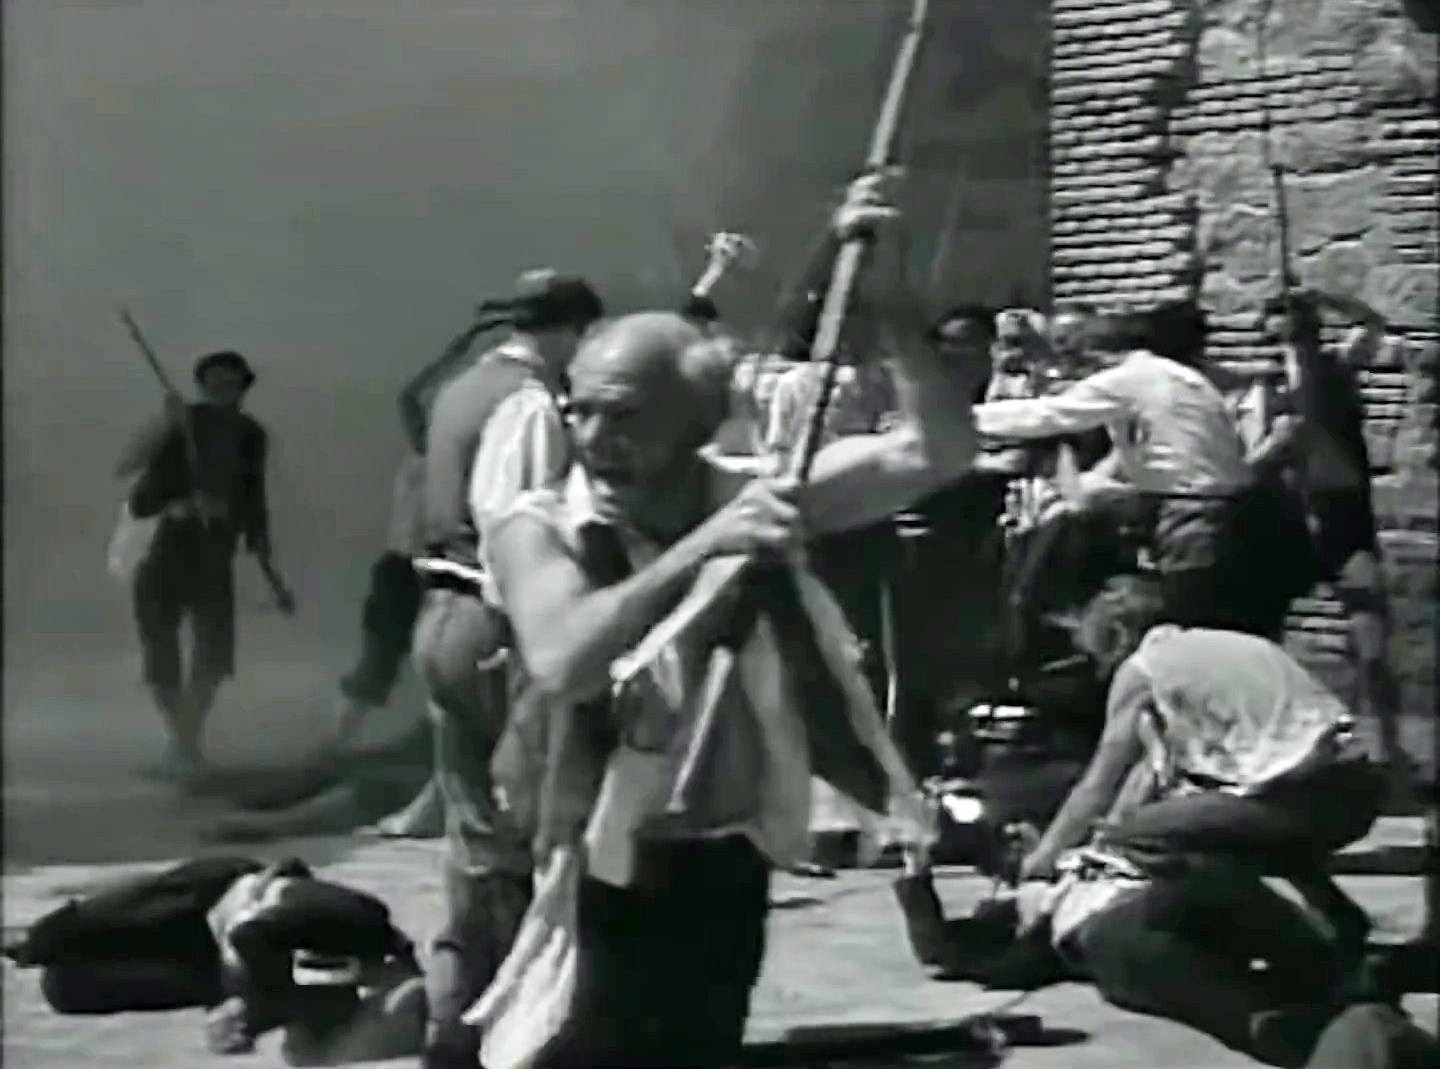 Les Amants de Tolède - Un film de Henri Decoin (1952)27.jpg